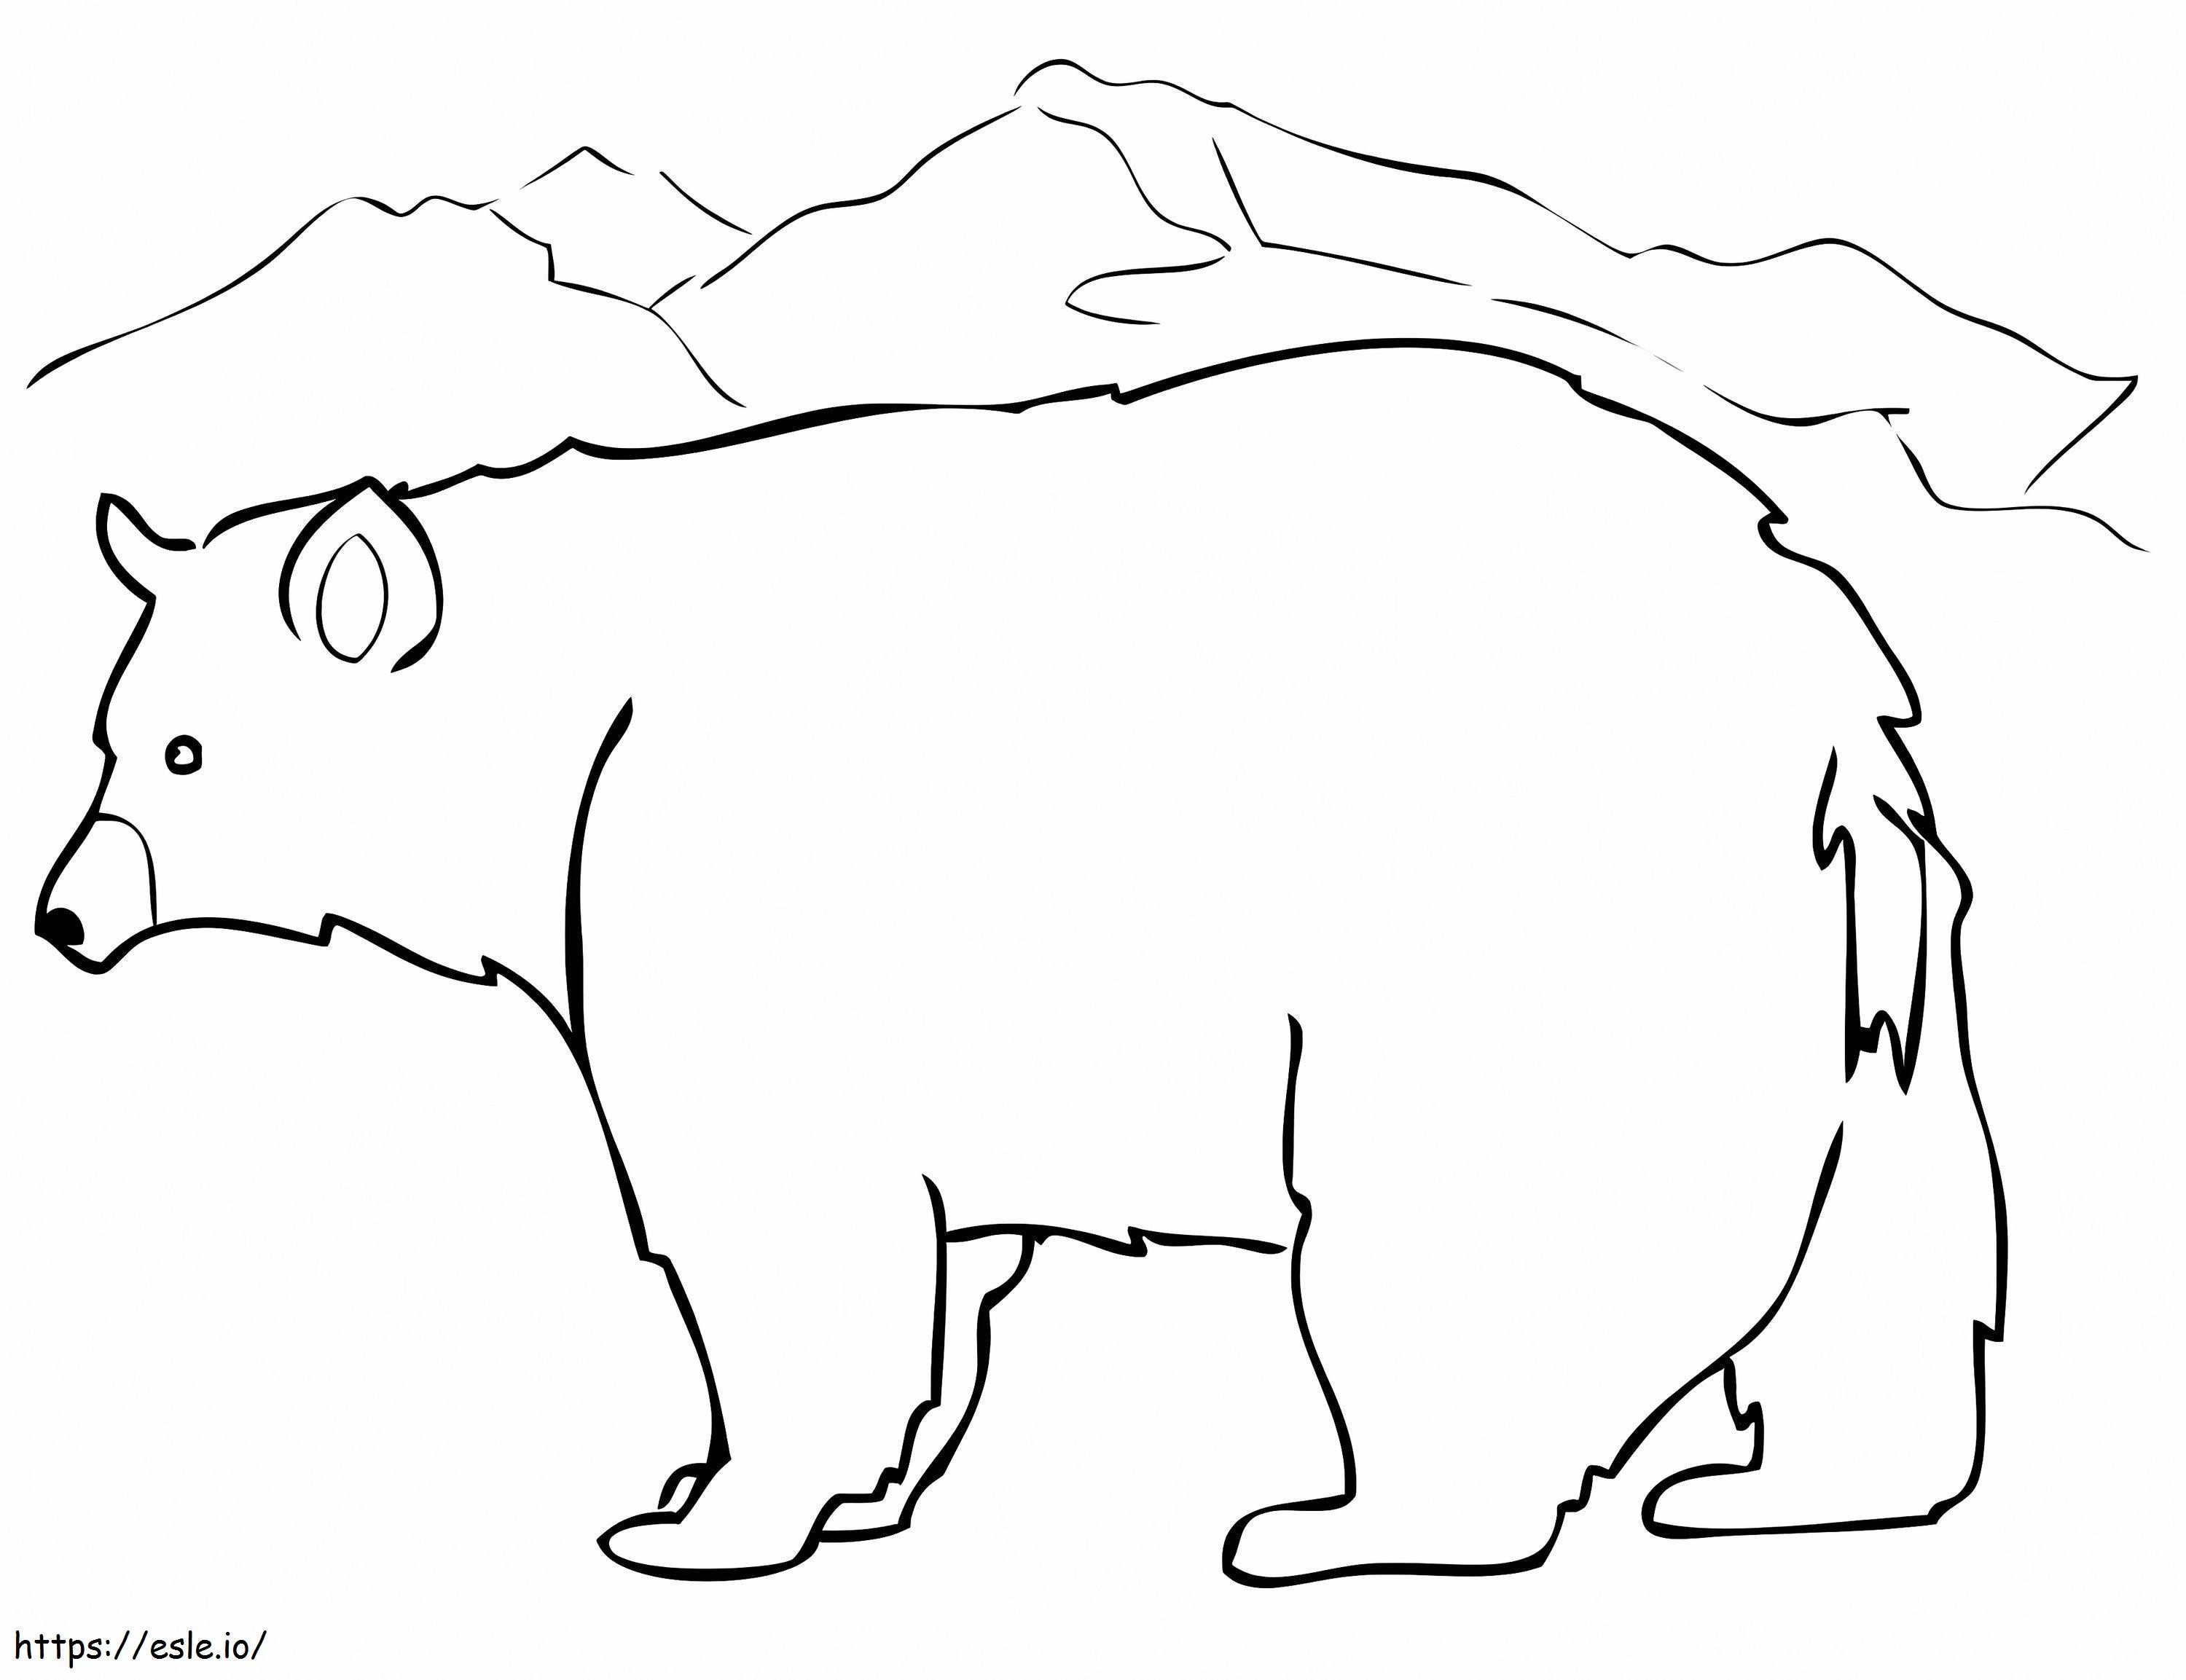 Urso Negro Fácil para colorir